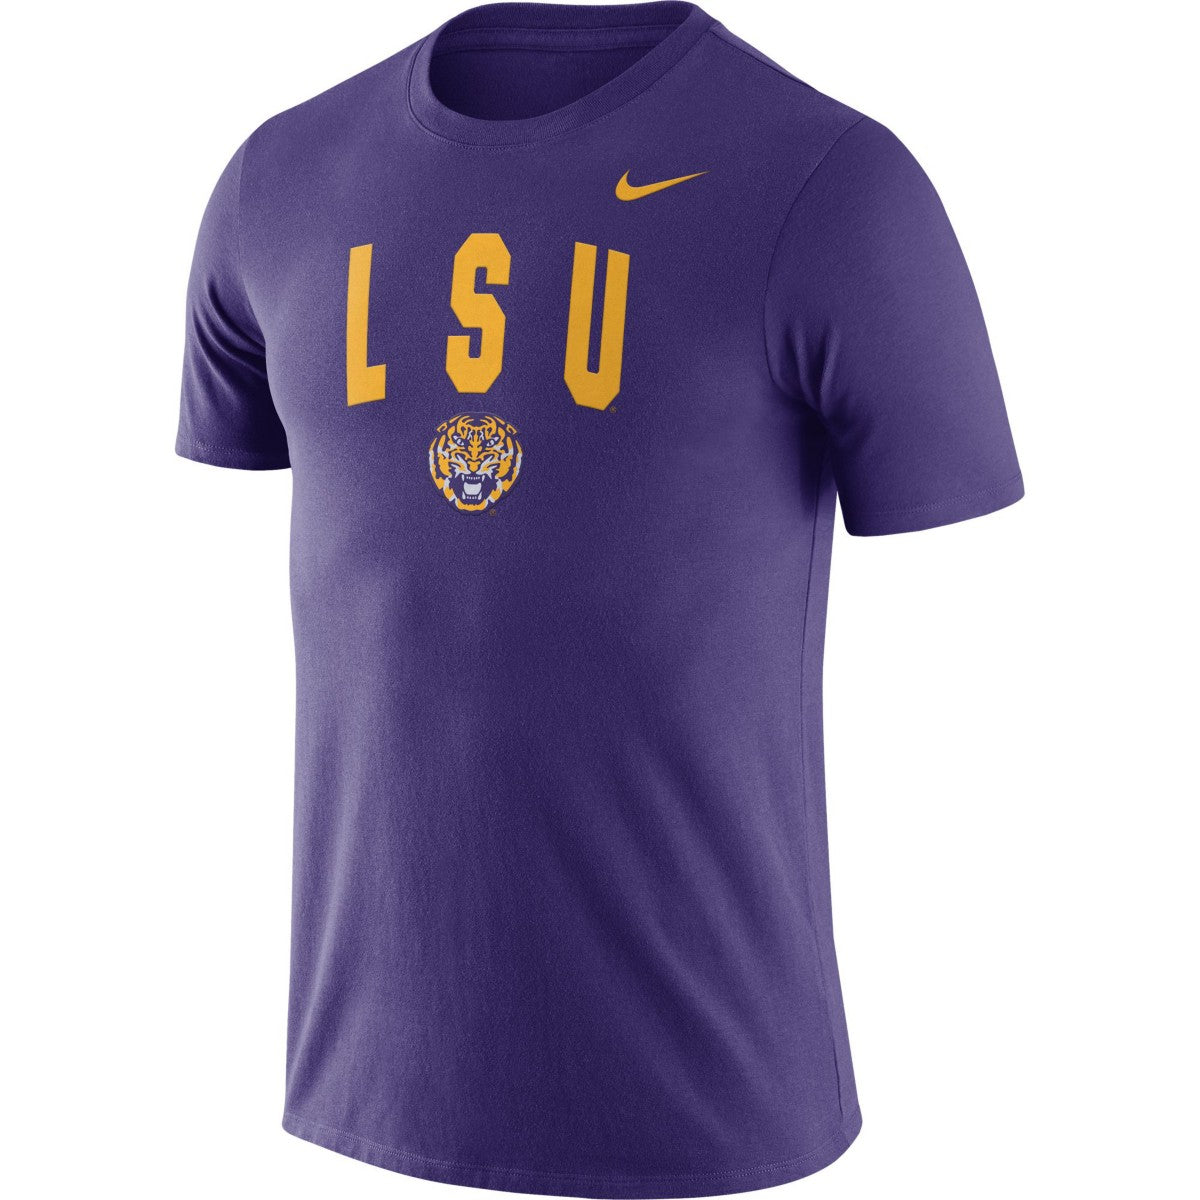 Men's LSU Tigers Nike Arch Suede Tee- Purple